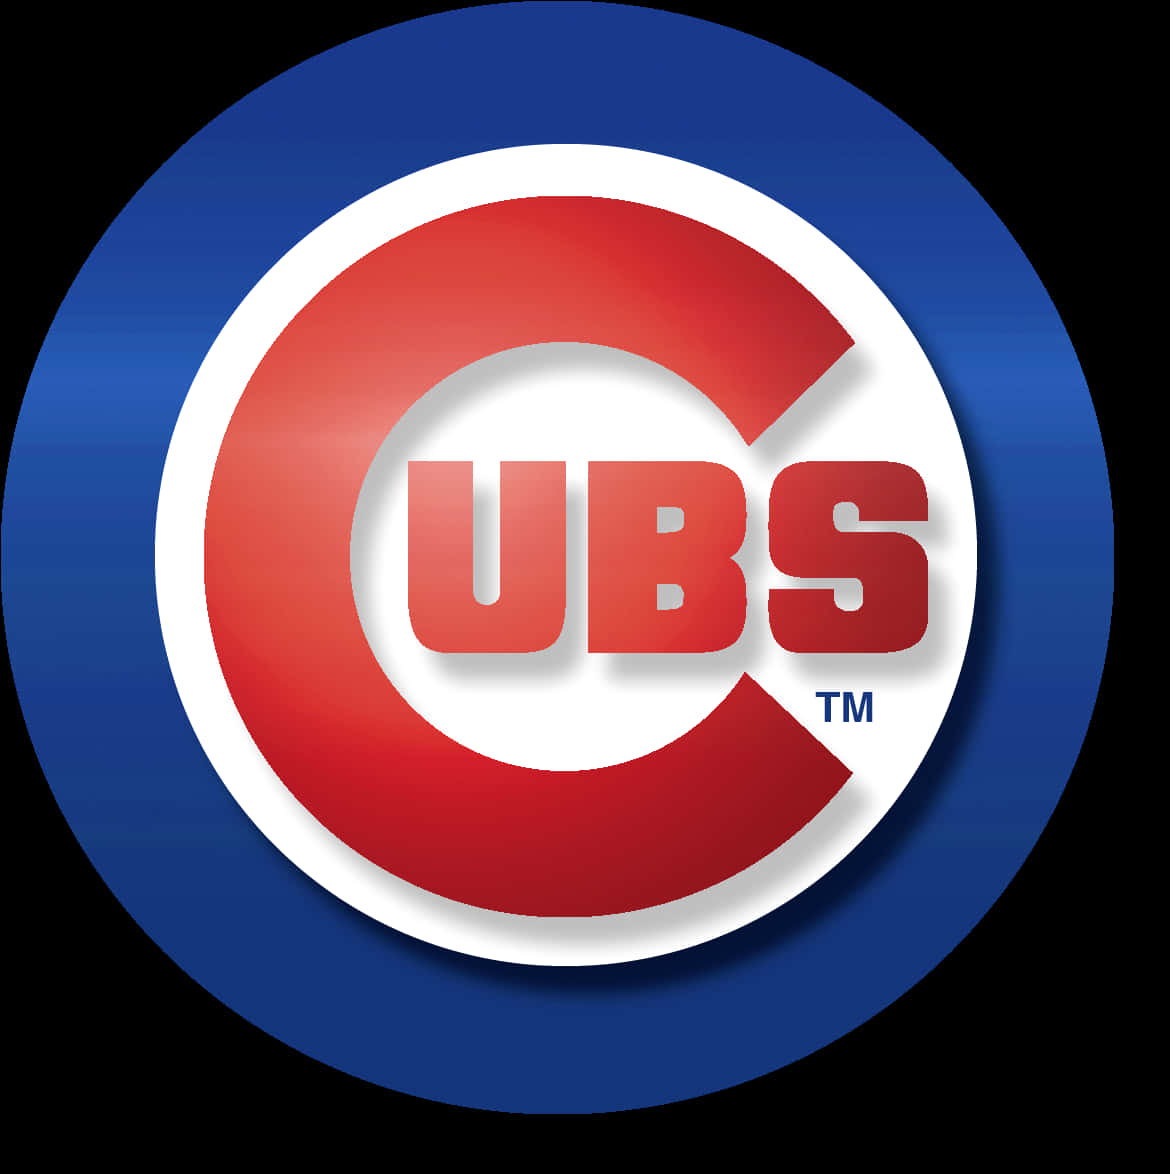 A Logo Of A Chicago Cubs Team